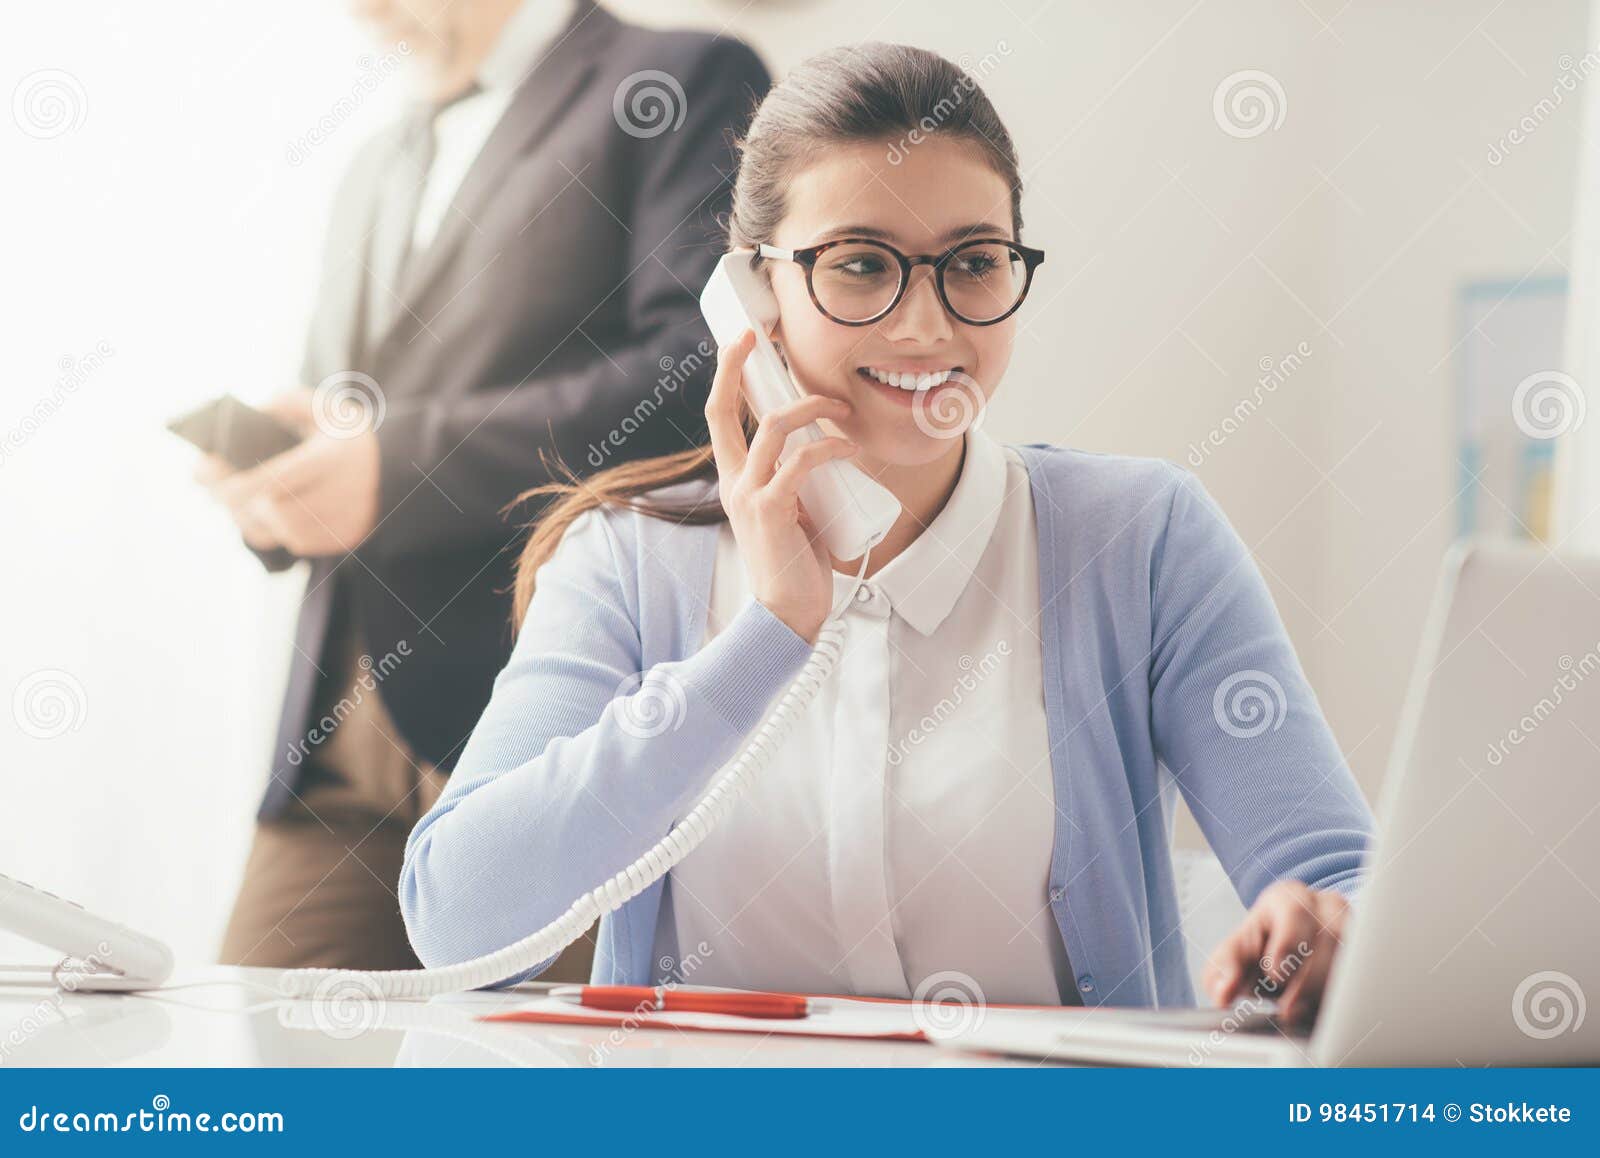 efficient secretary on the phone